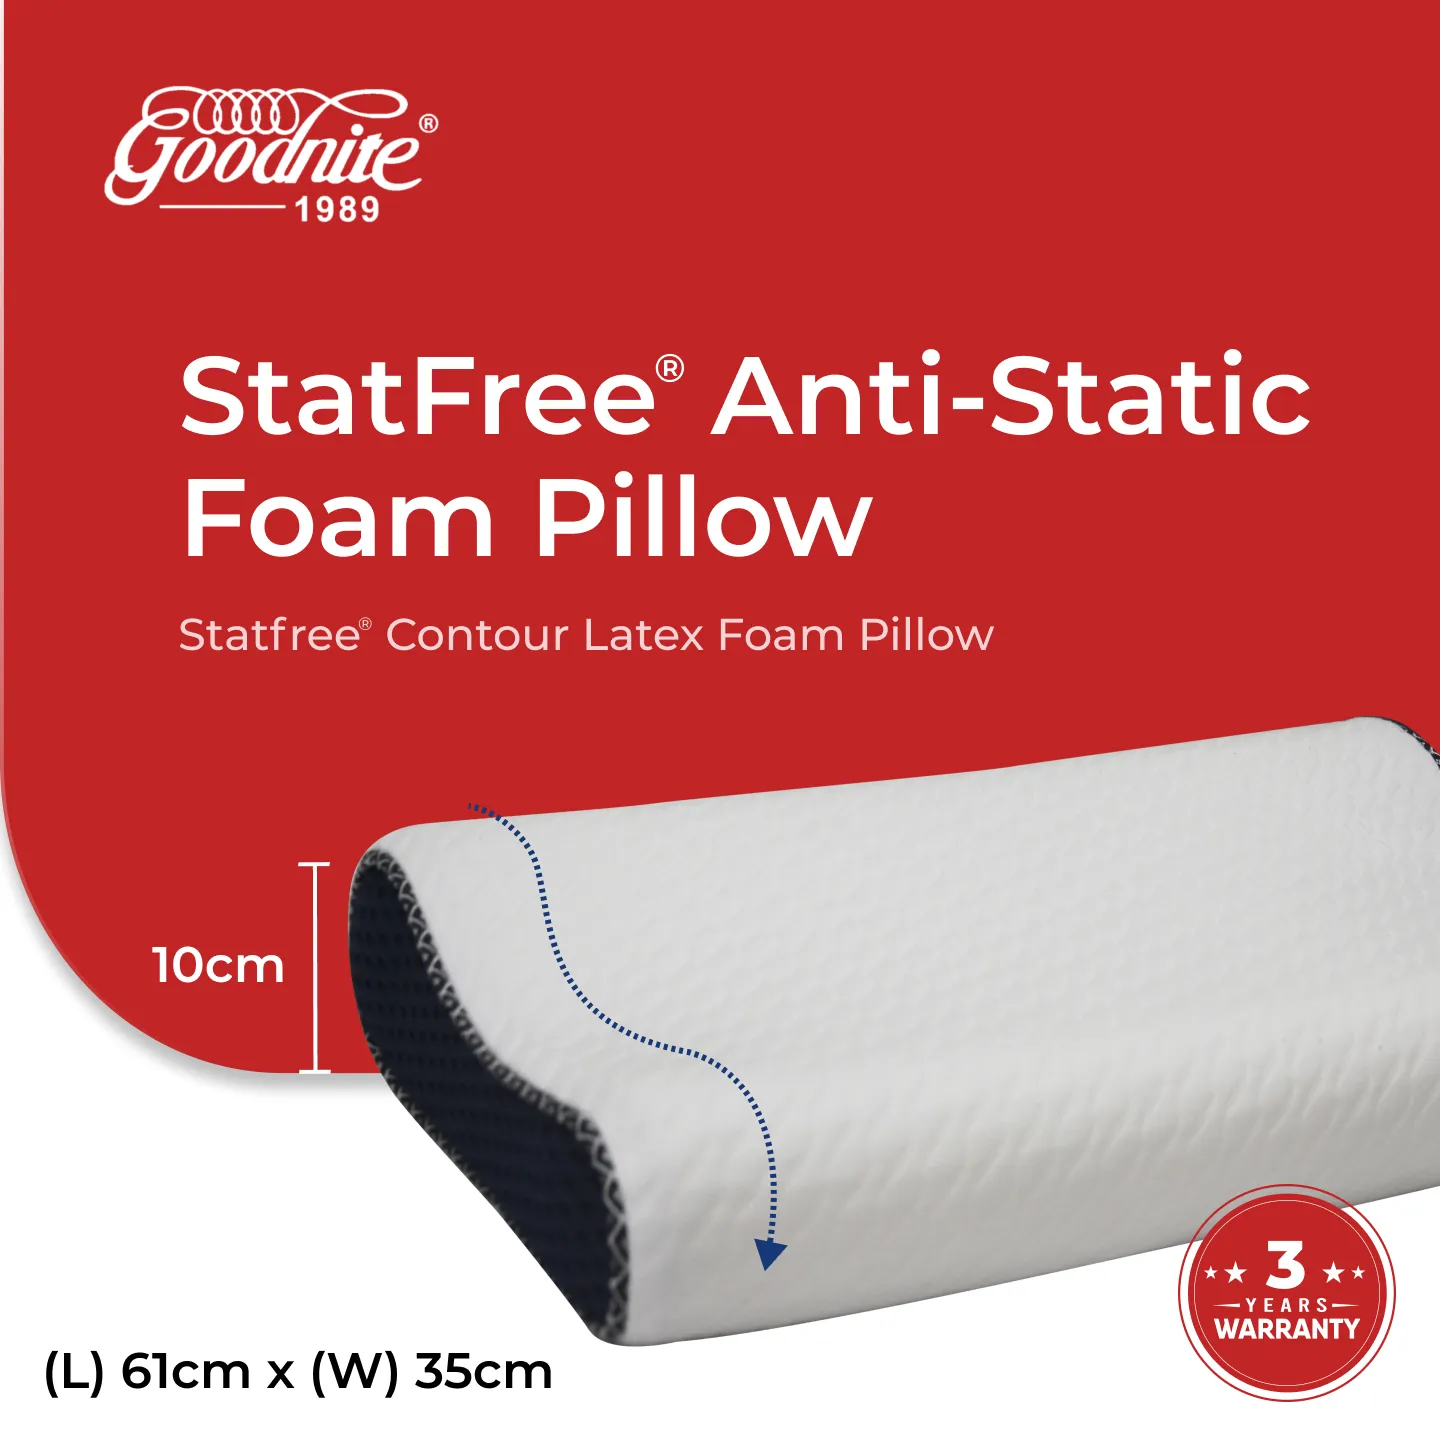 Statfree Contour Latex Foam Pillow M.jpg